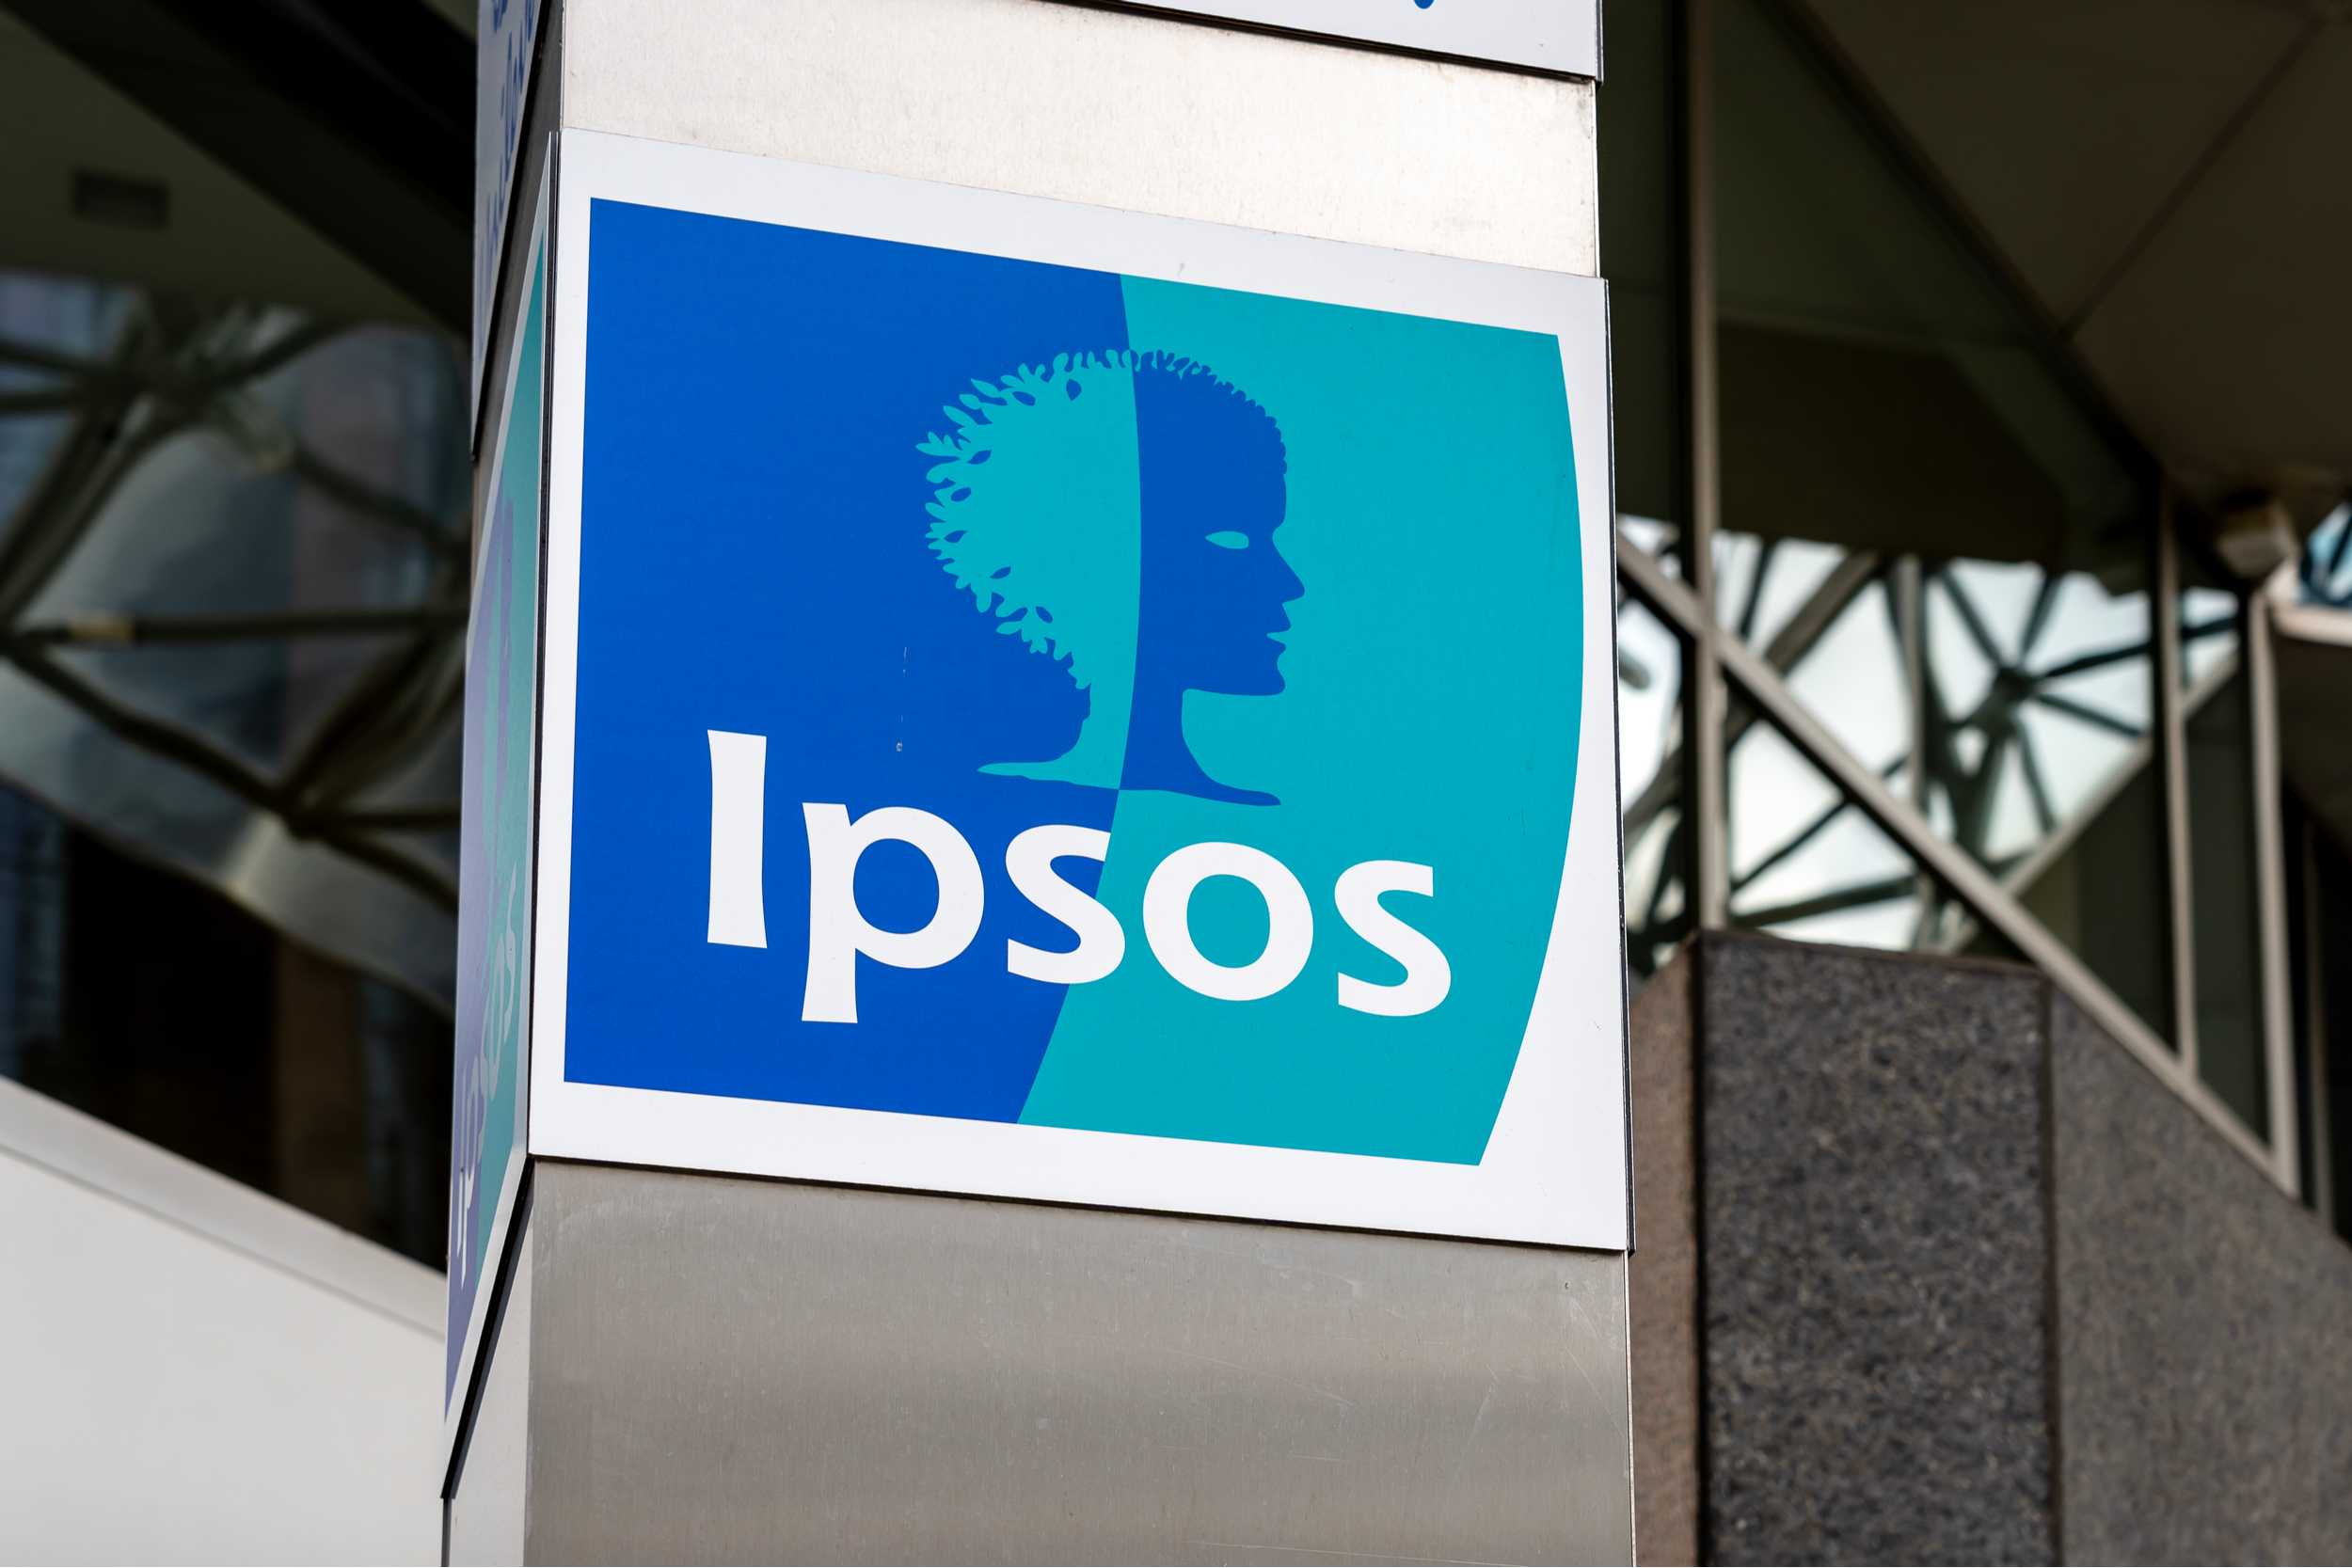 Logo pracowni IPSOS. Fot. JHVEPhoto / Shutterstock.com